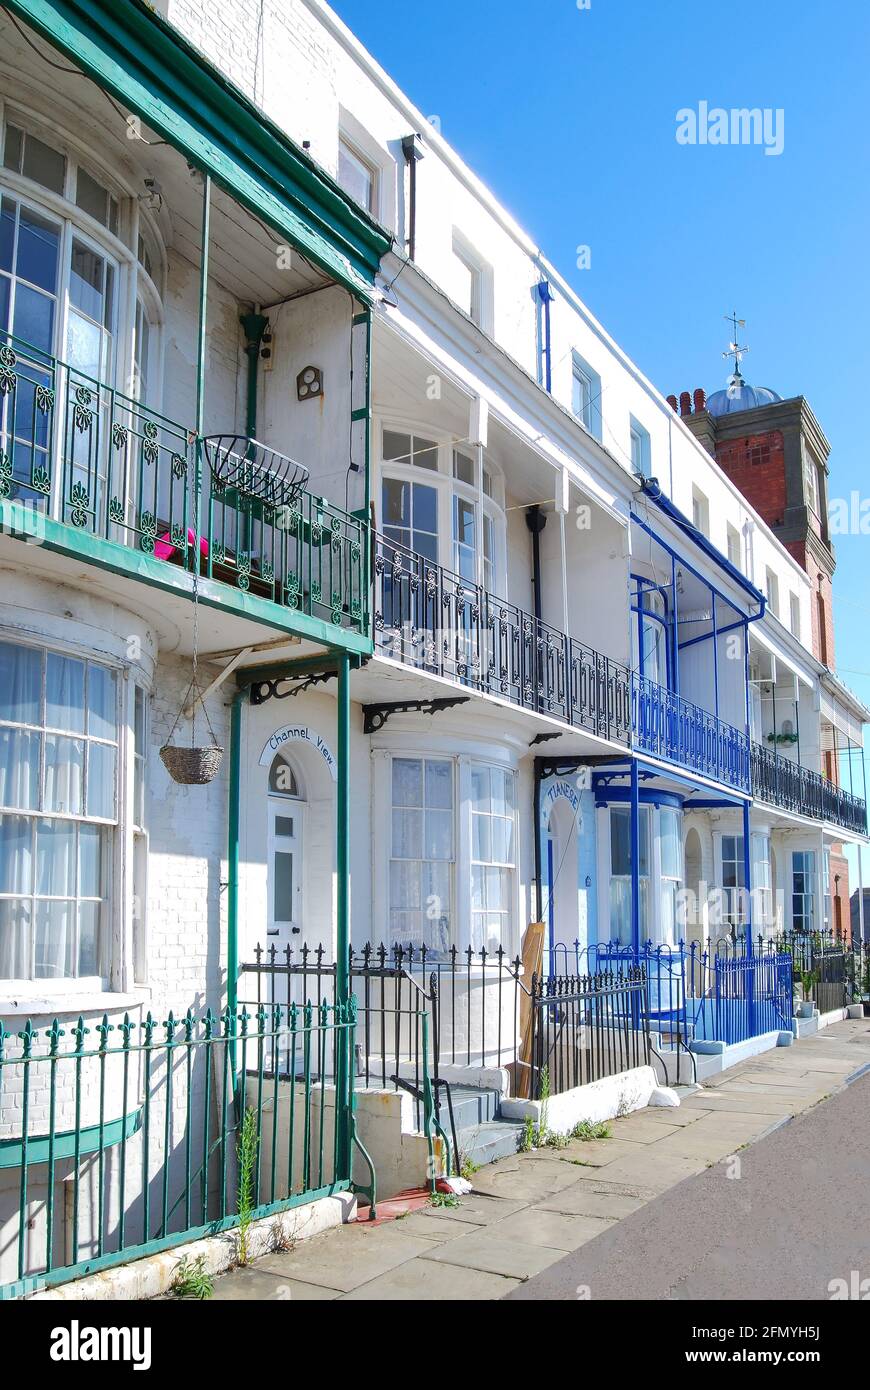 Waterfront houses needing renovation, Ramsgate, Isle of Thanet, Kent, England, United Kingdom Stock Photo